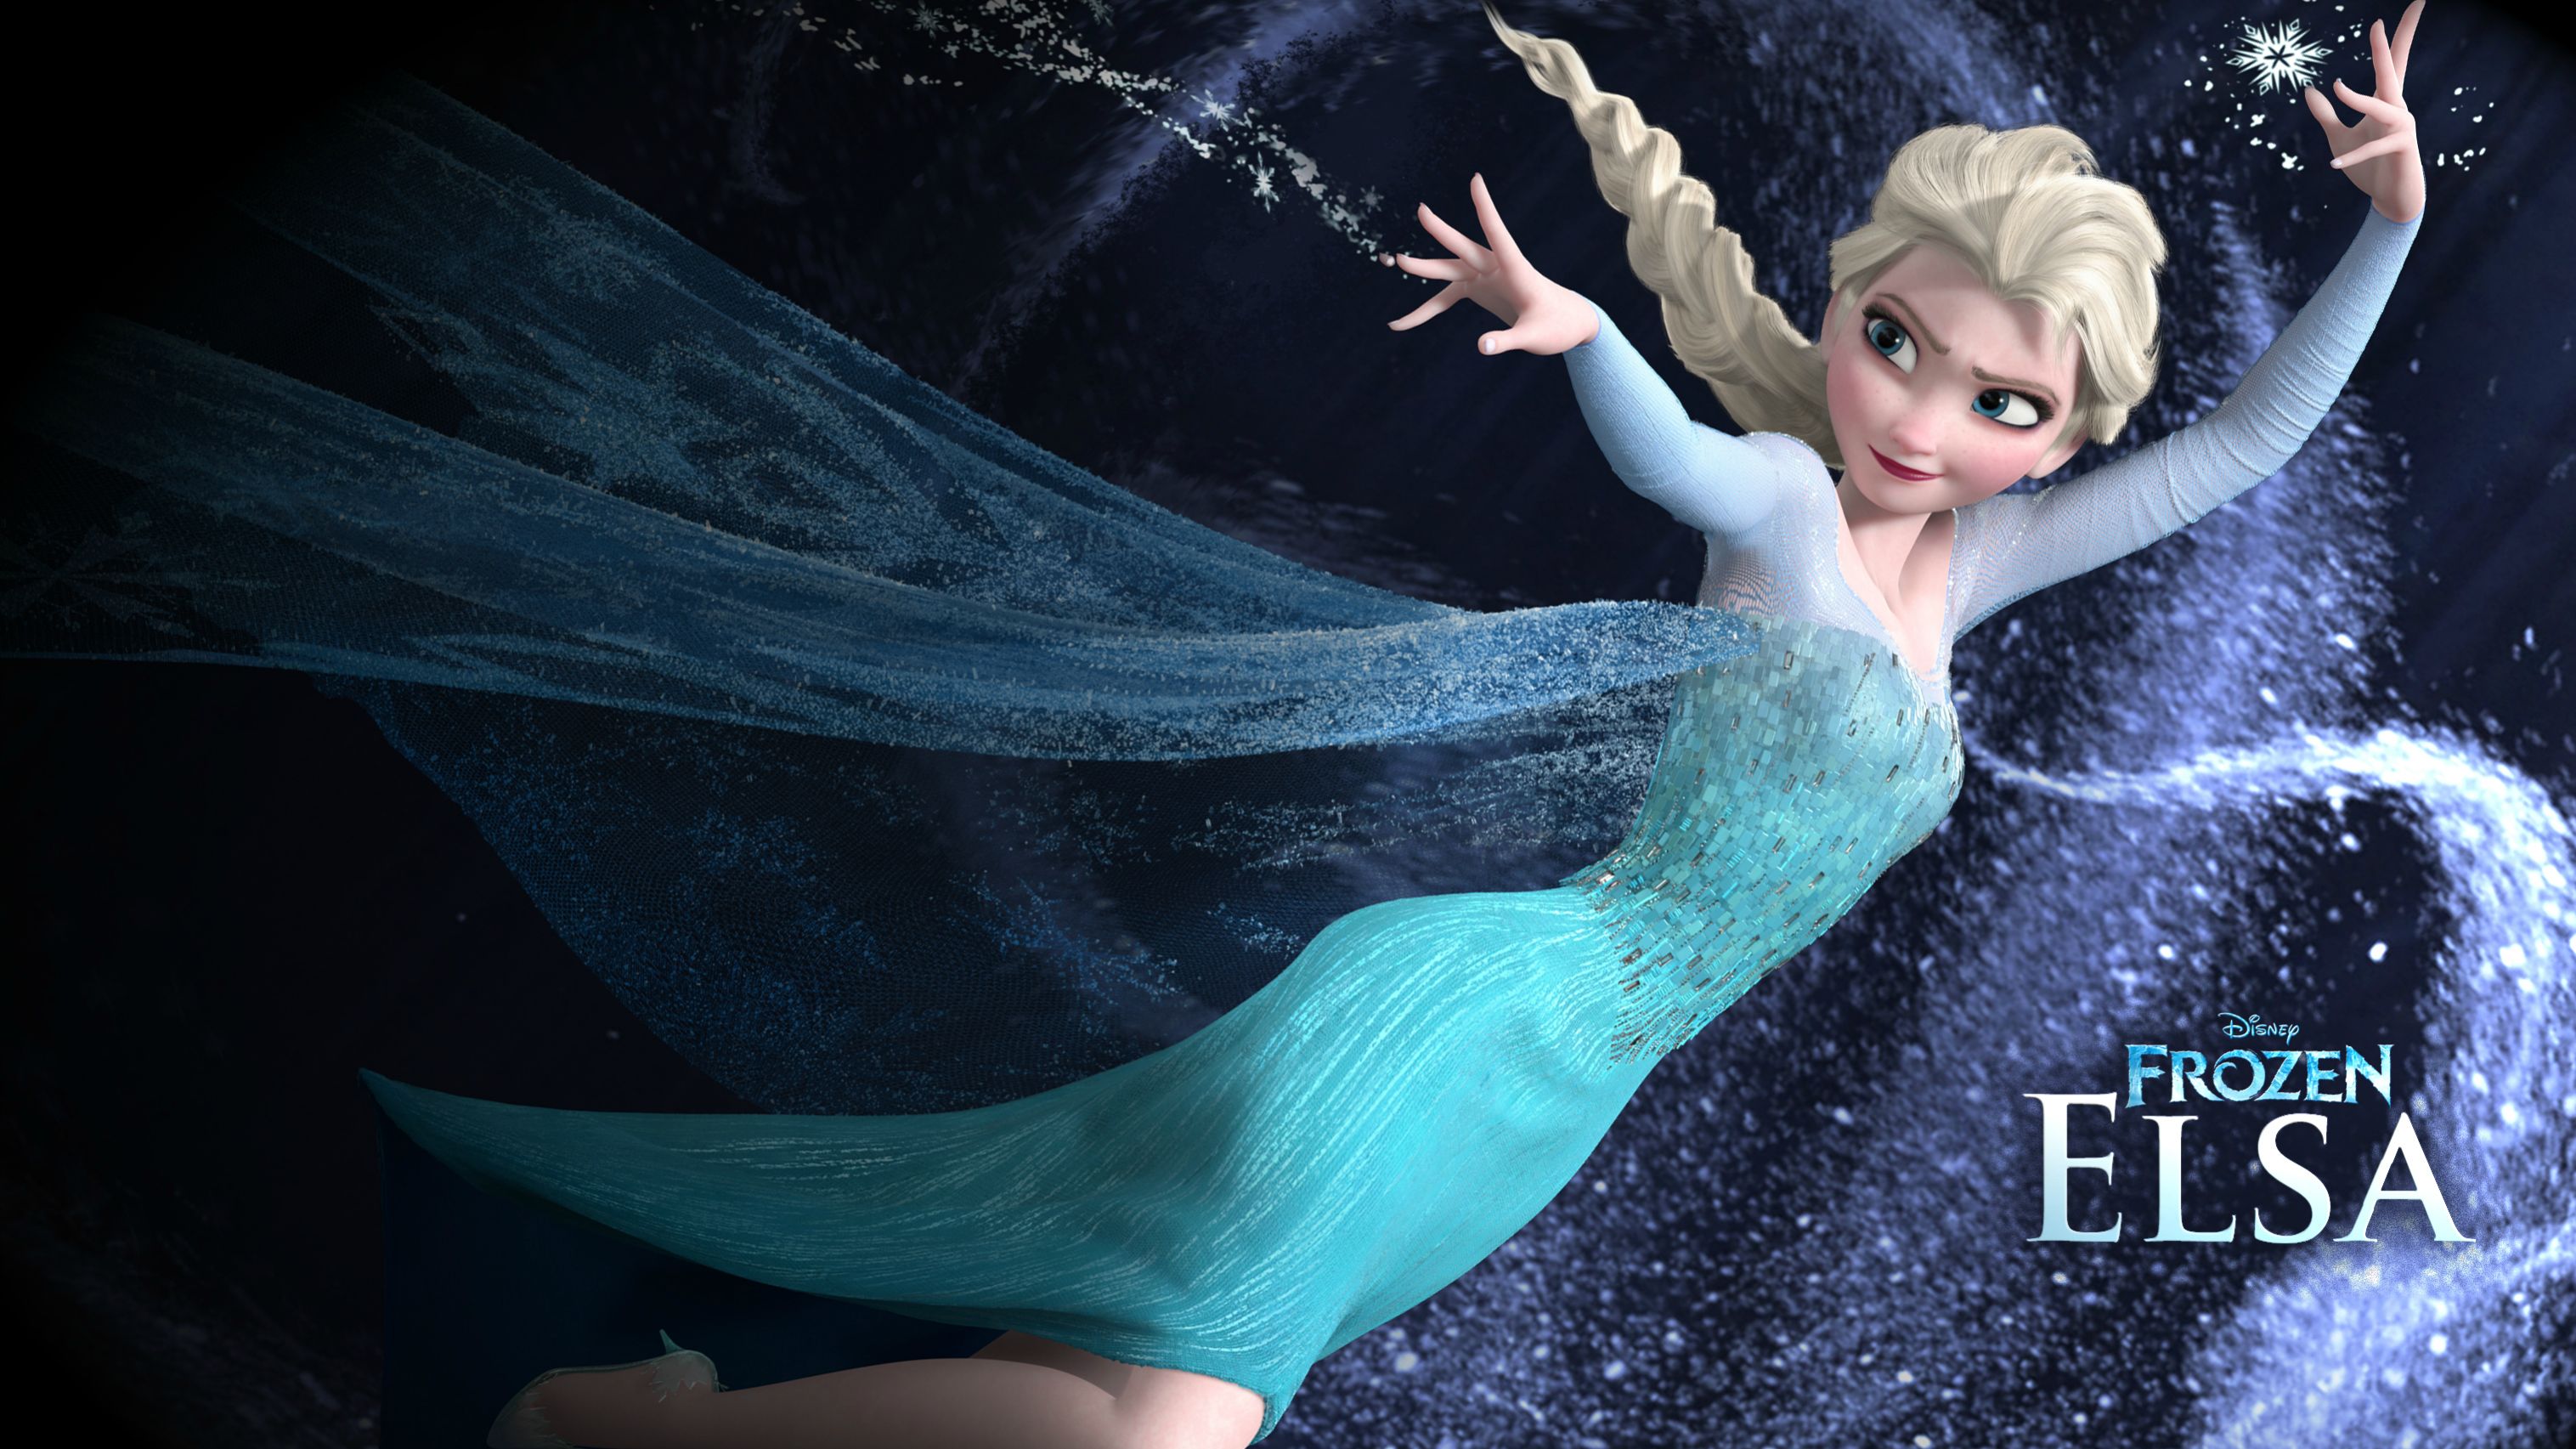 Elsa In Frozen Wallpapers Best Wallpapers FanDownload Free